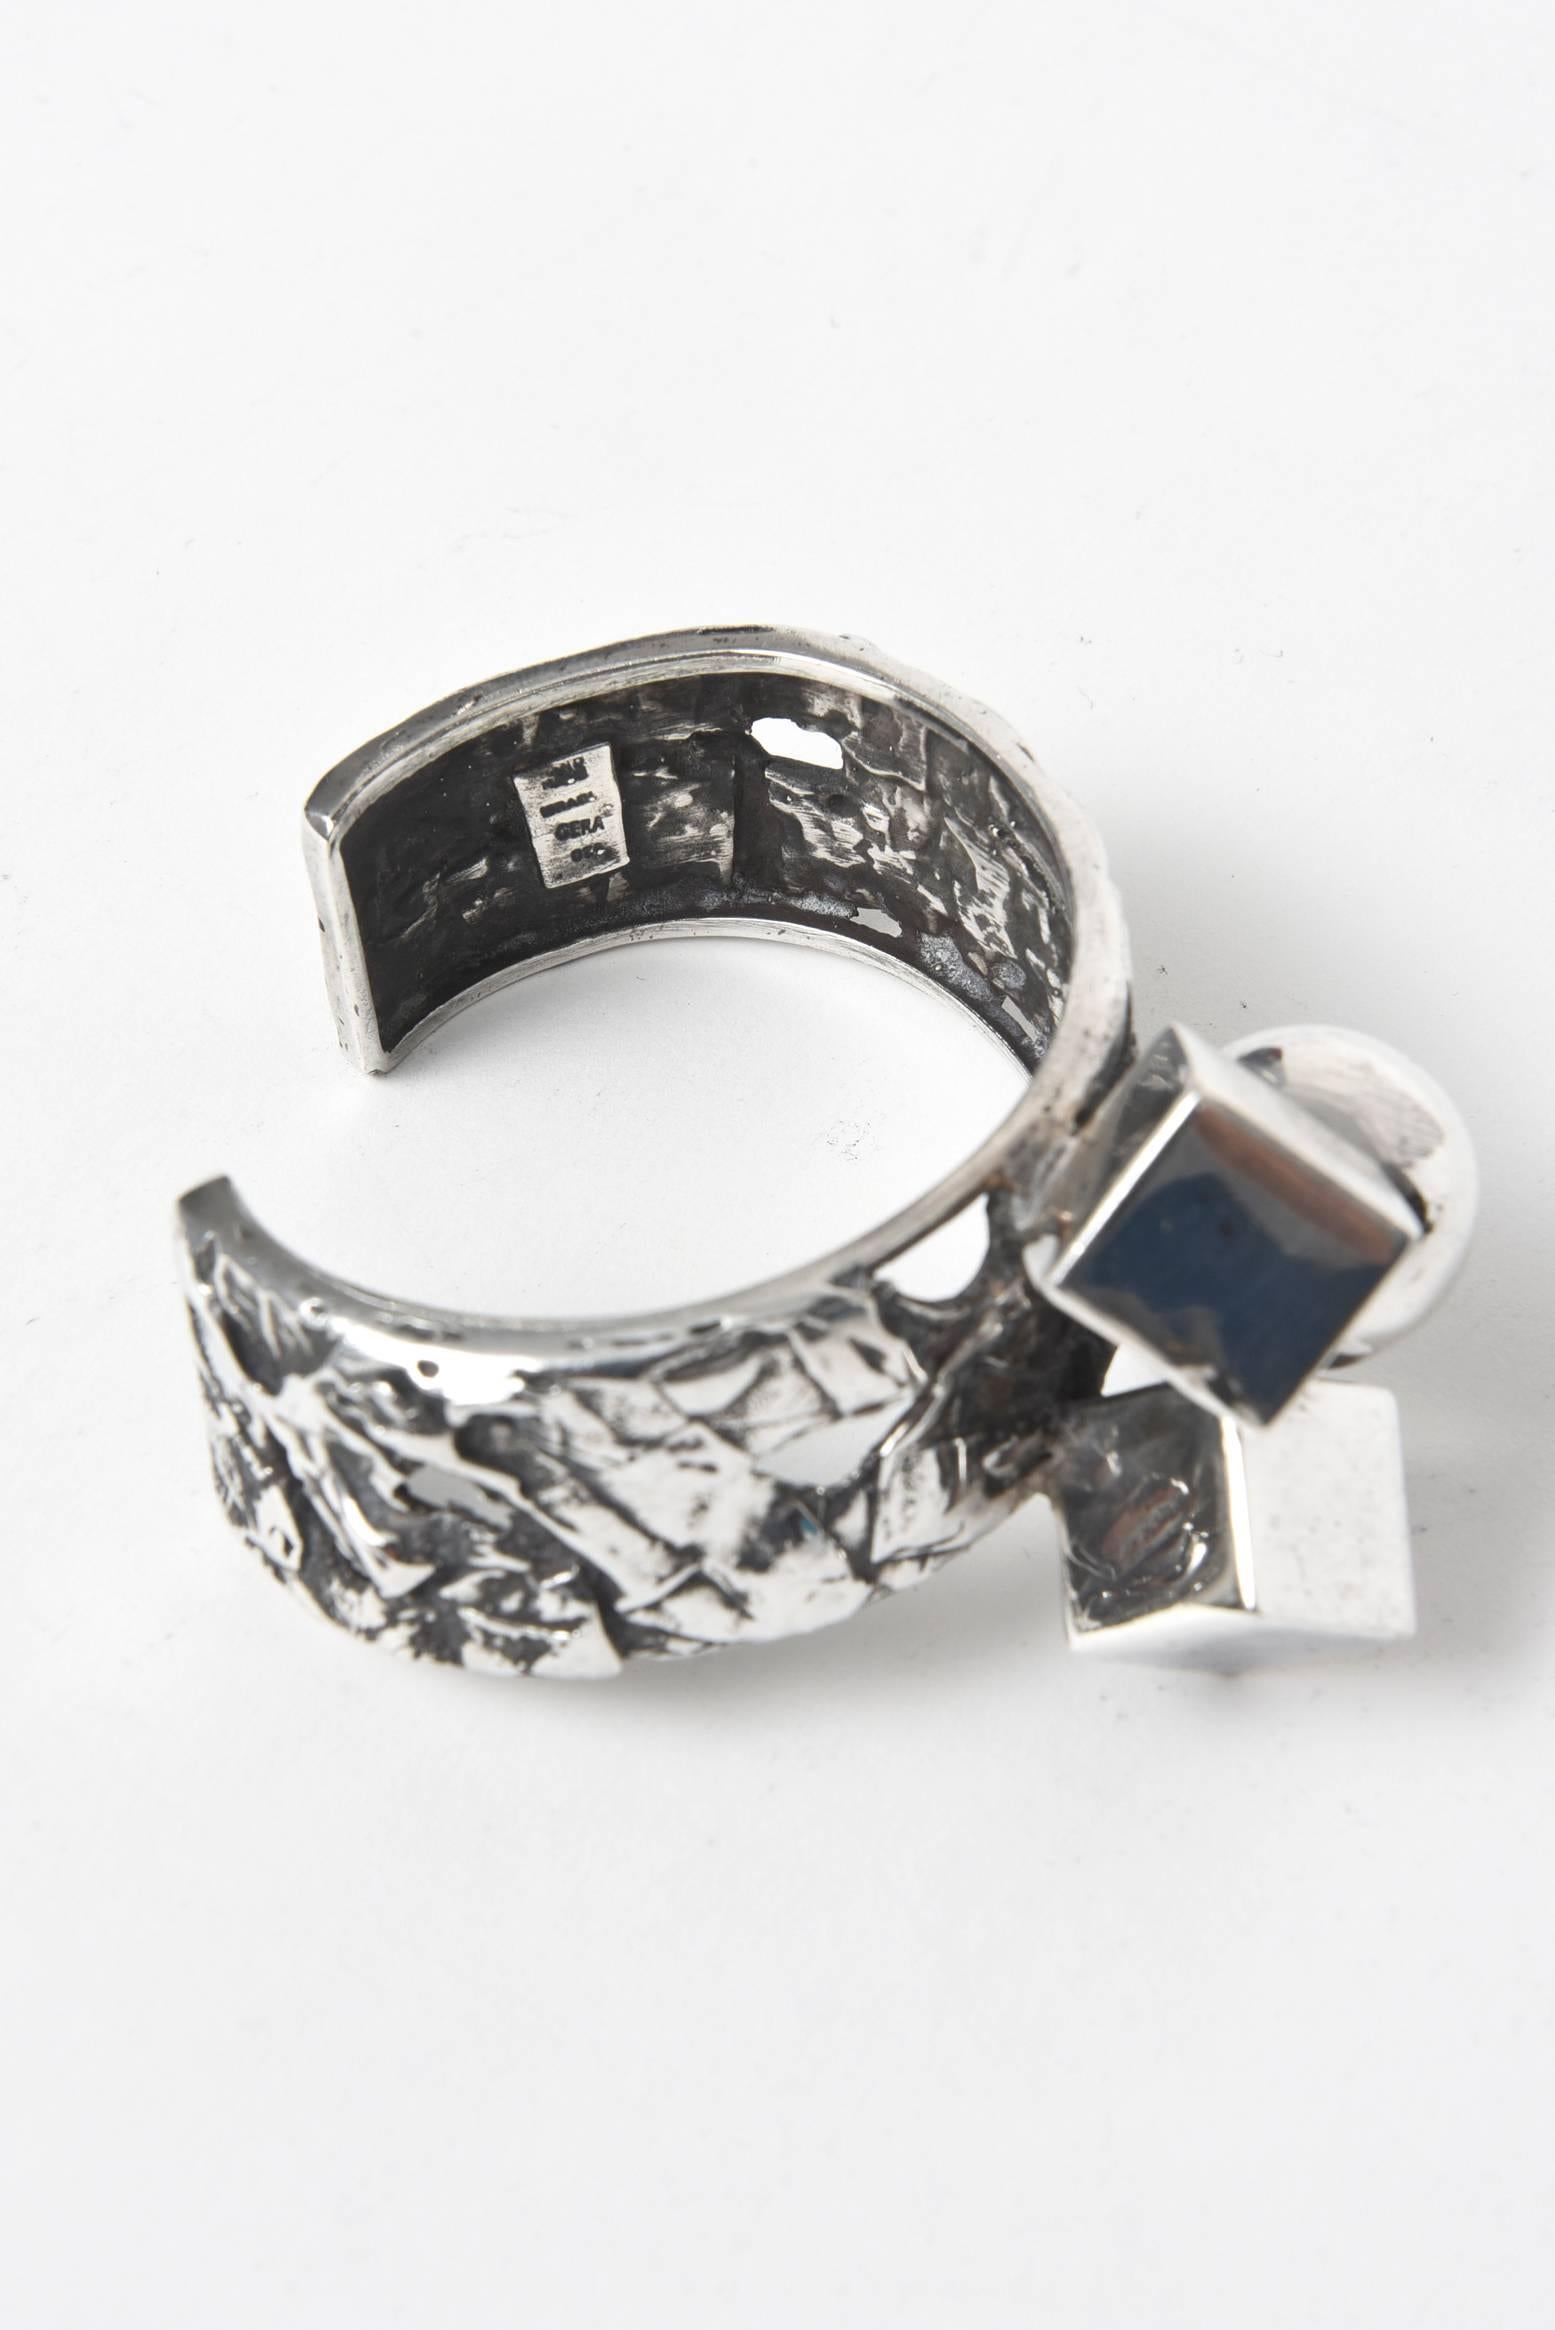 Women's or Men's Modernist Brutalist Design Sterling Silver Cuff Bracelet by Rachel Gera For Sale